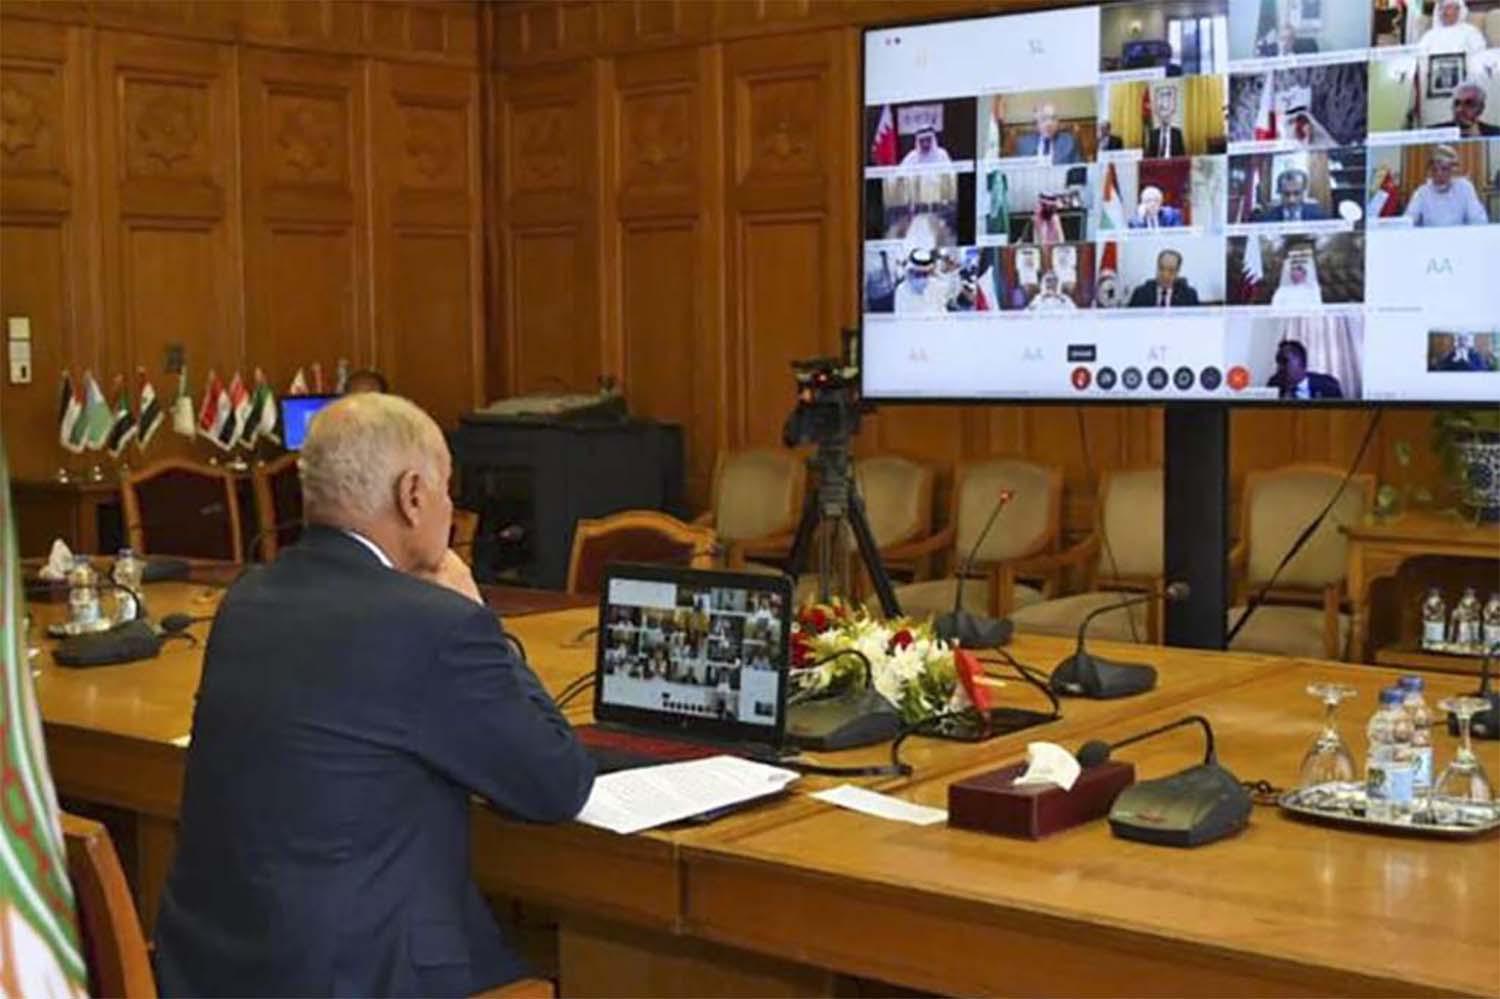 Arab League Chief Ahmed Abul Gheit chairing an urgent virtual foreign ministers meeting on Libya